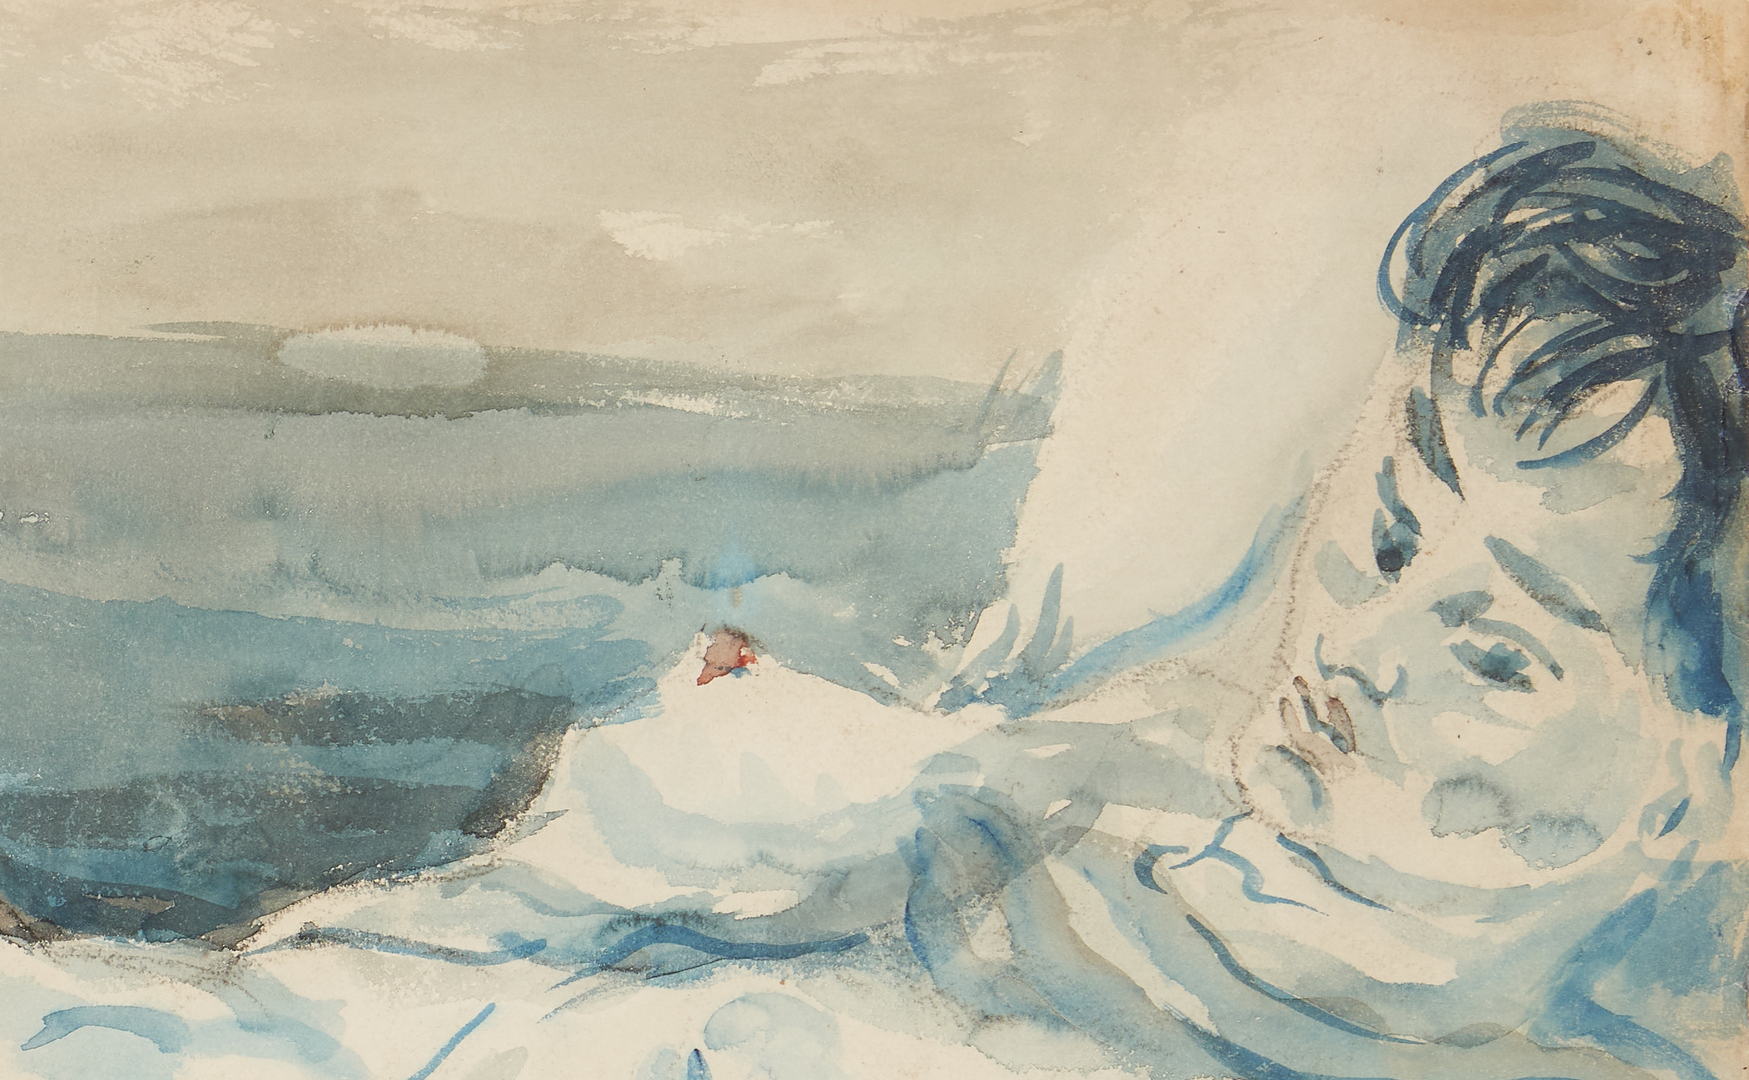 Lot 142: Joseph Delaney Watercolor of a Nude Woman